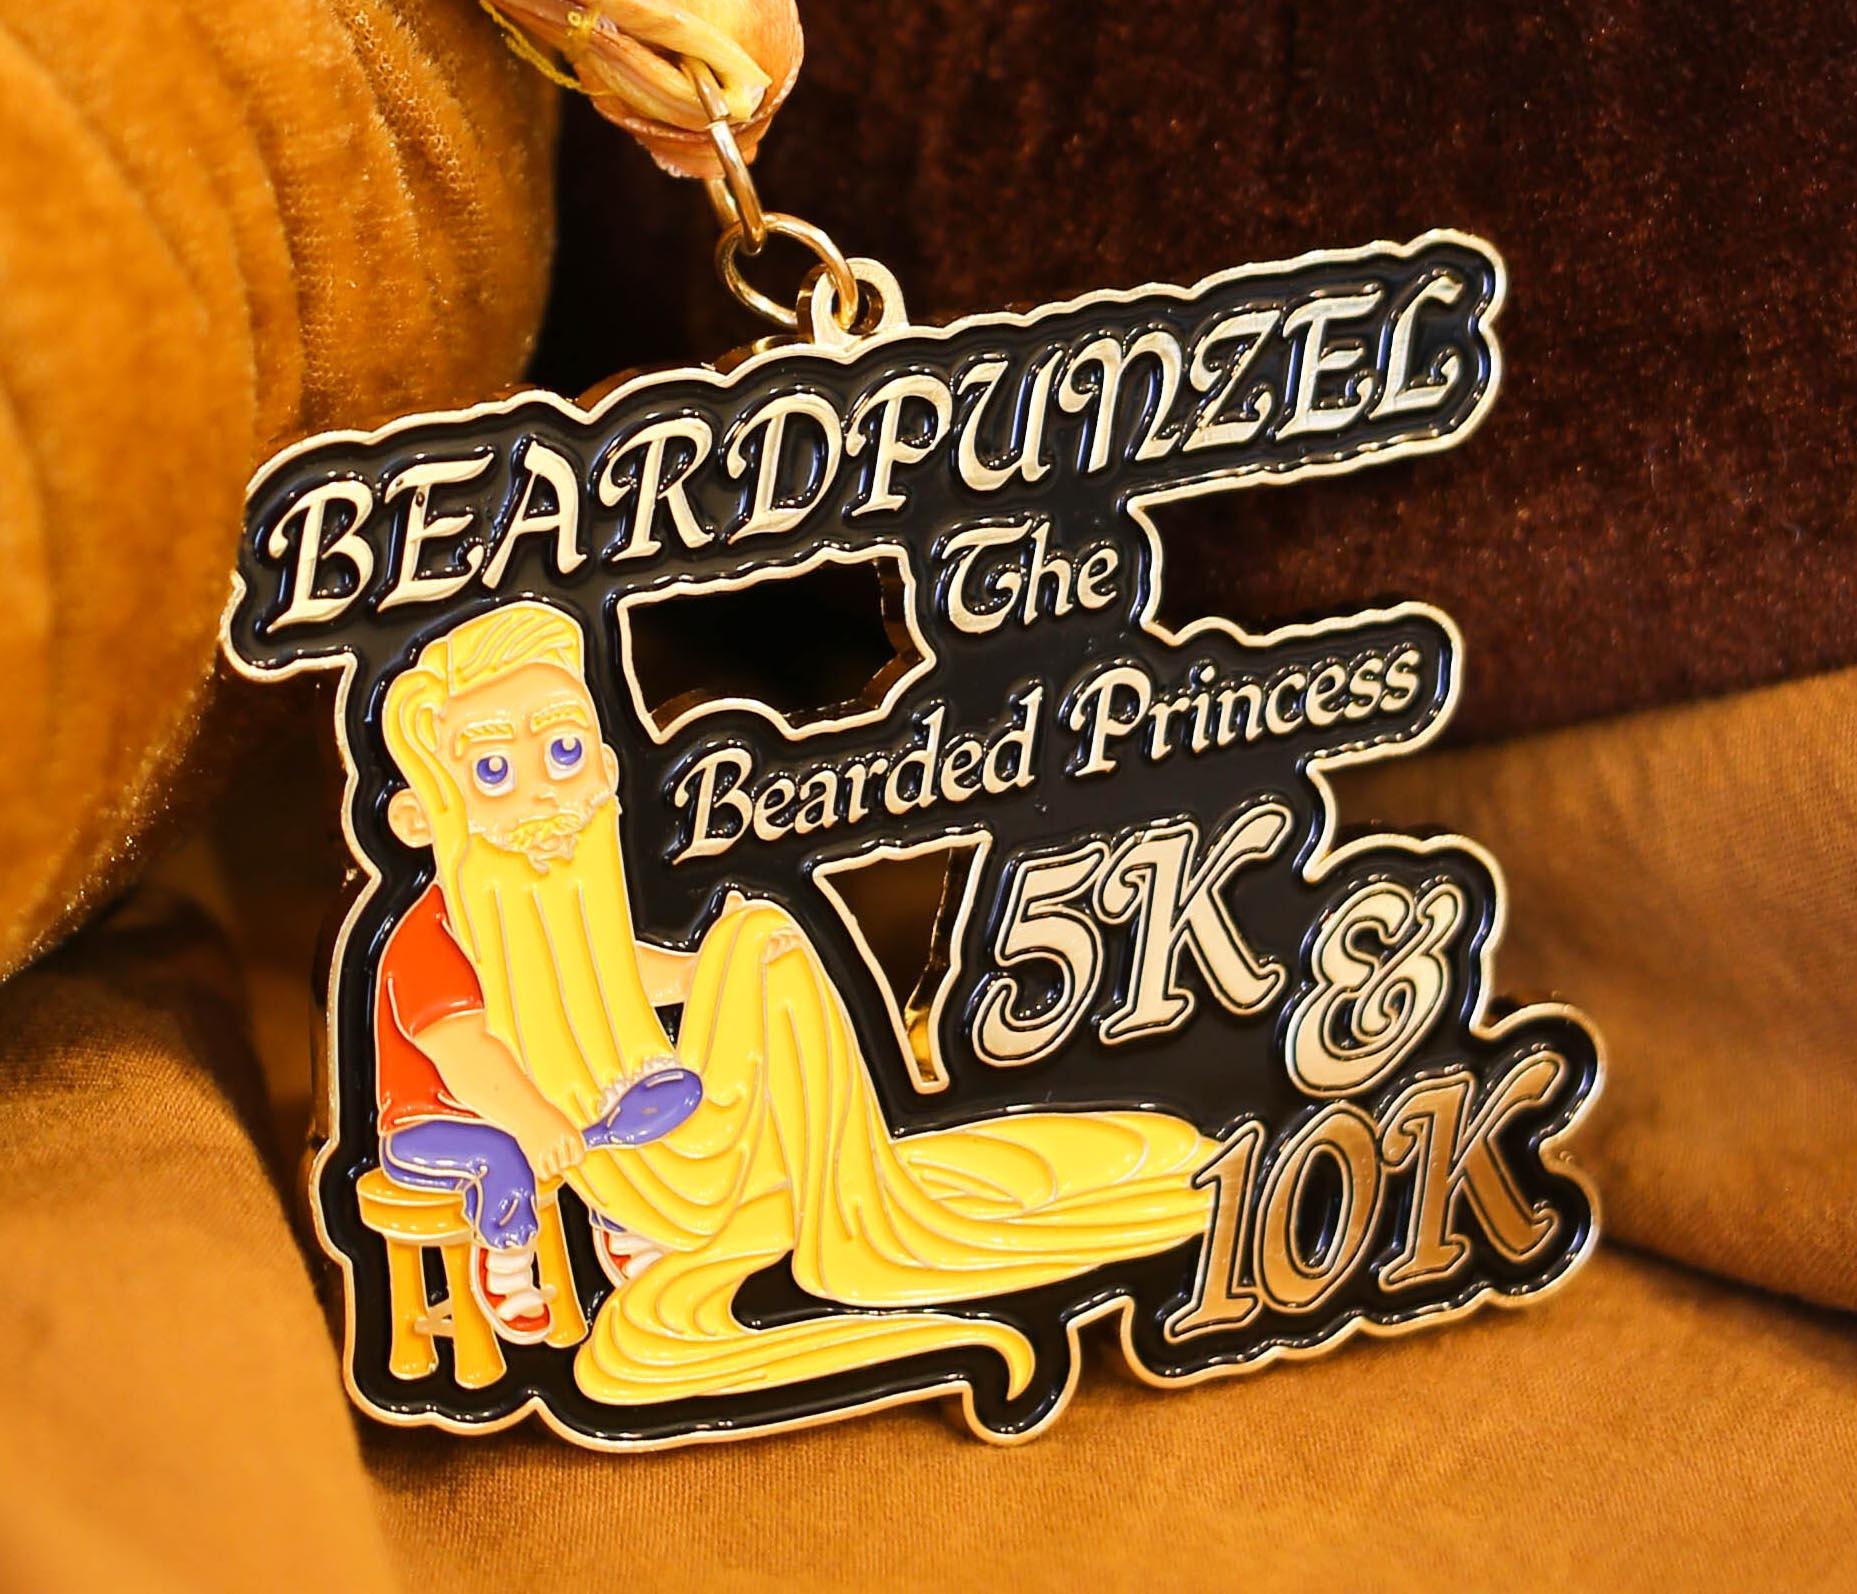 Beardpunzel - The Bearded Princess 5K & 10K -ONLY $8 - Charlotte